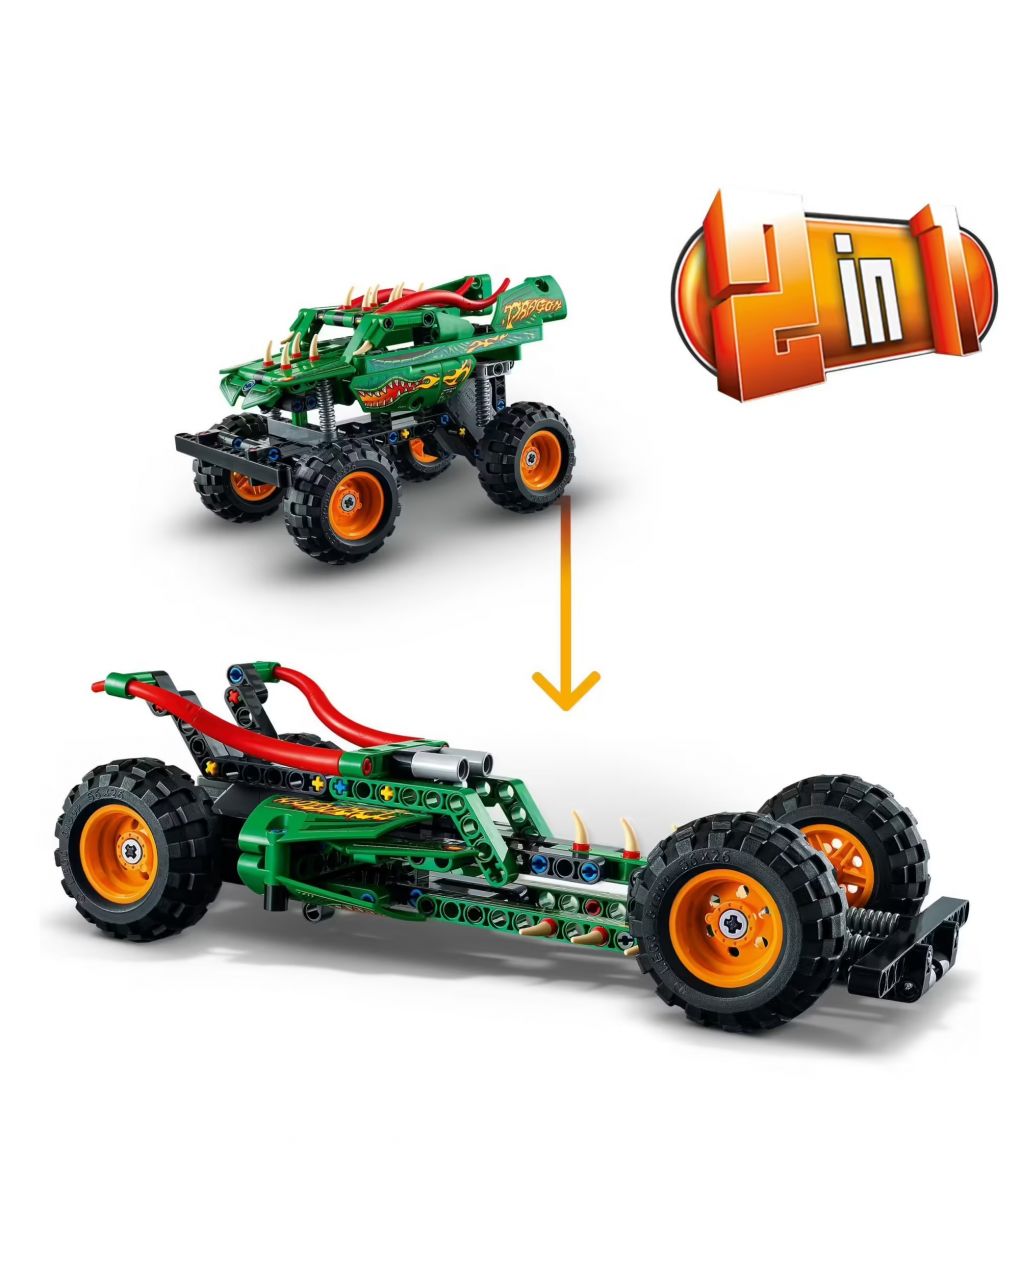 Monster jam dragon - set 2 in 1 con pull-back - auto offroad monster truck e macchina giocattolo buggy - lego technic - LEGO